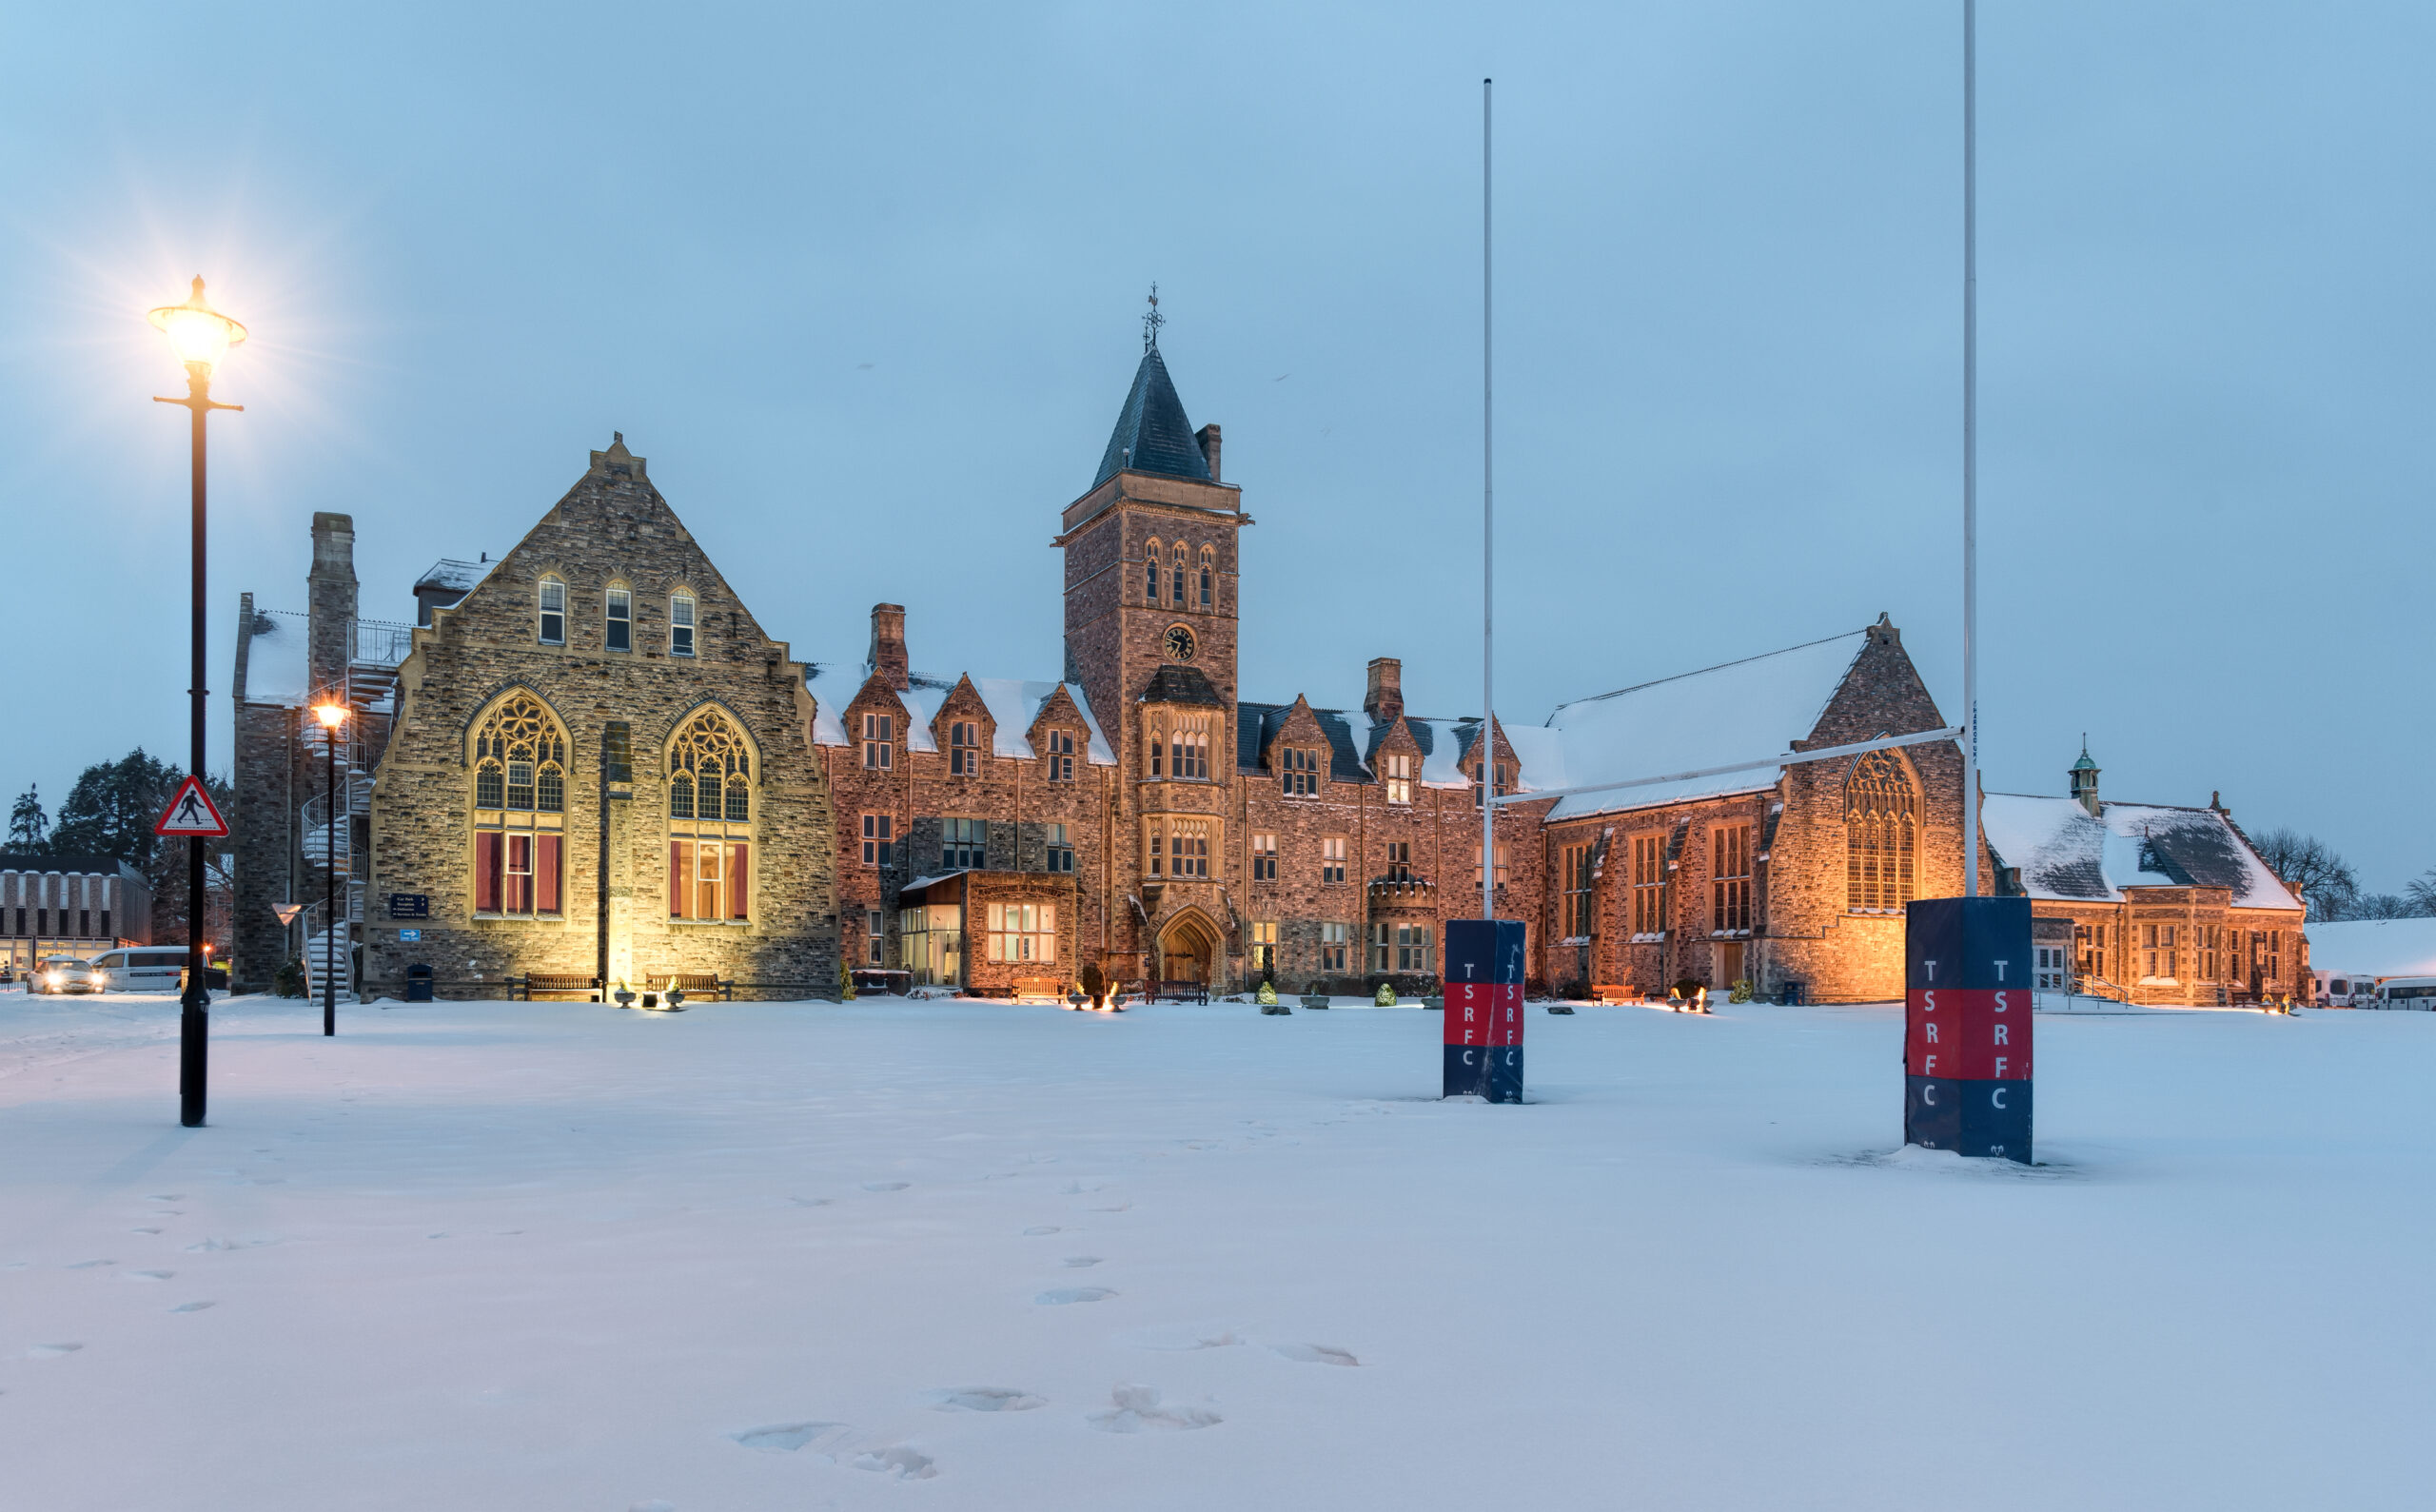 Taunton School in the snow